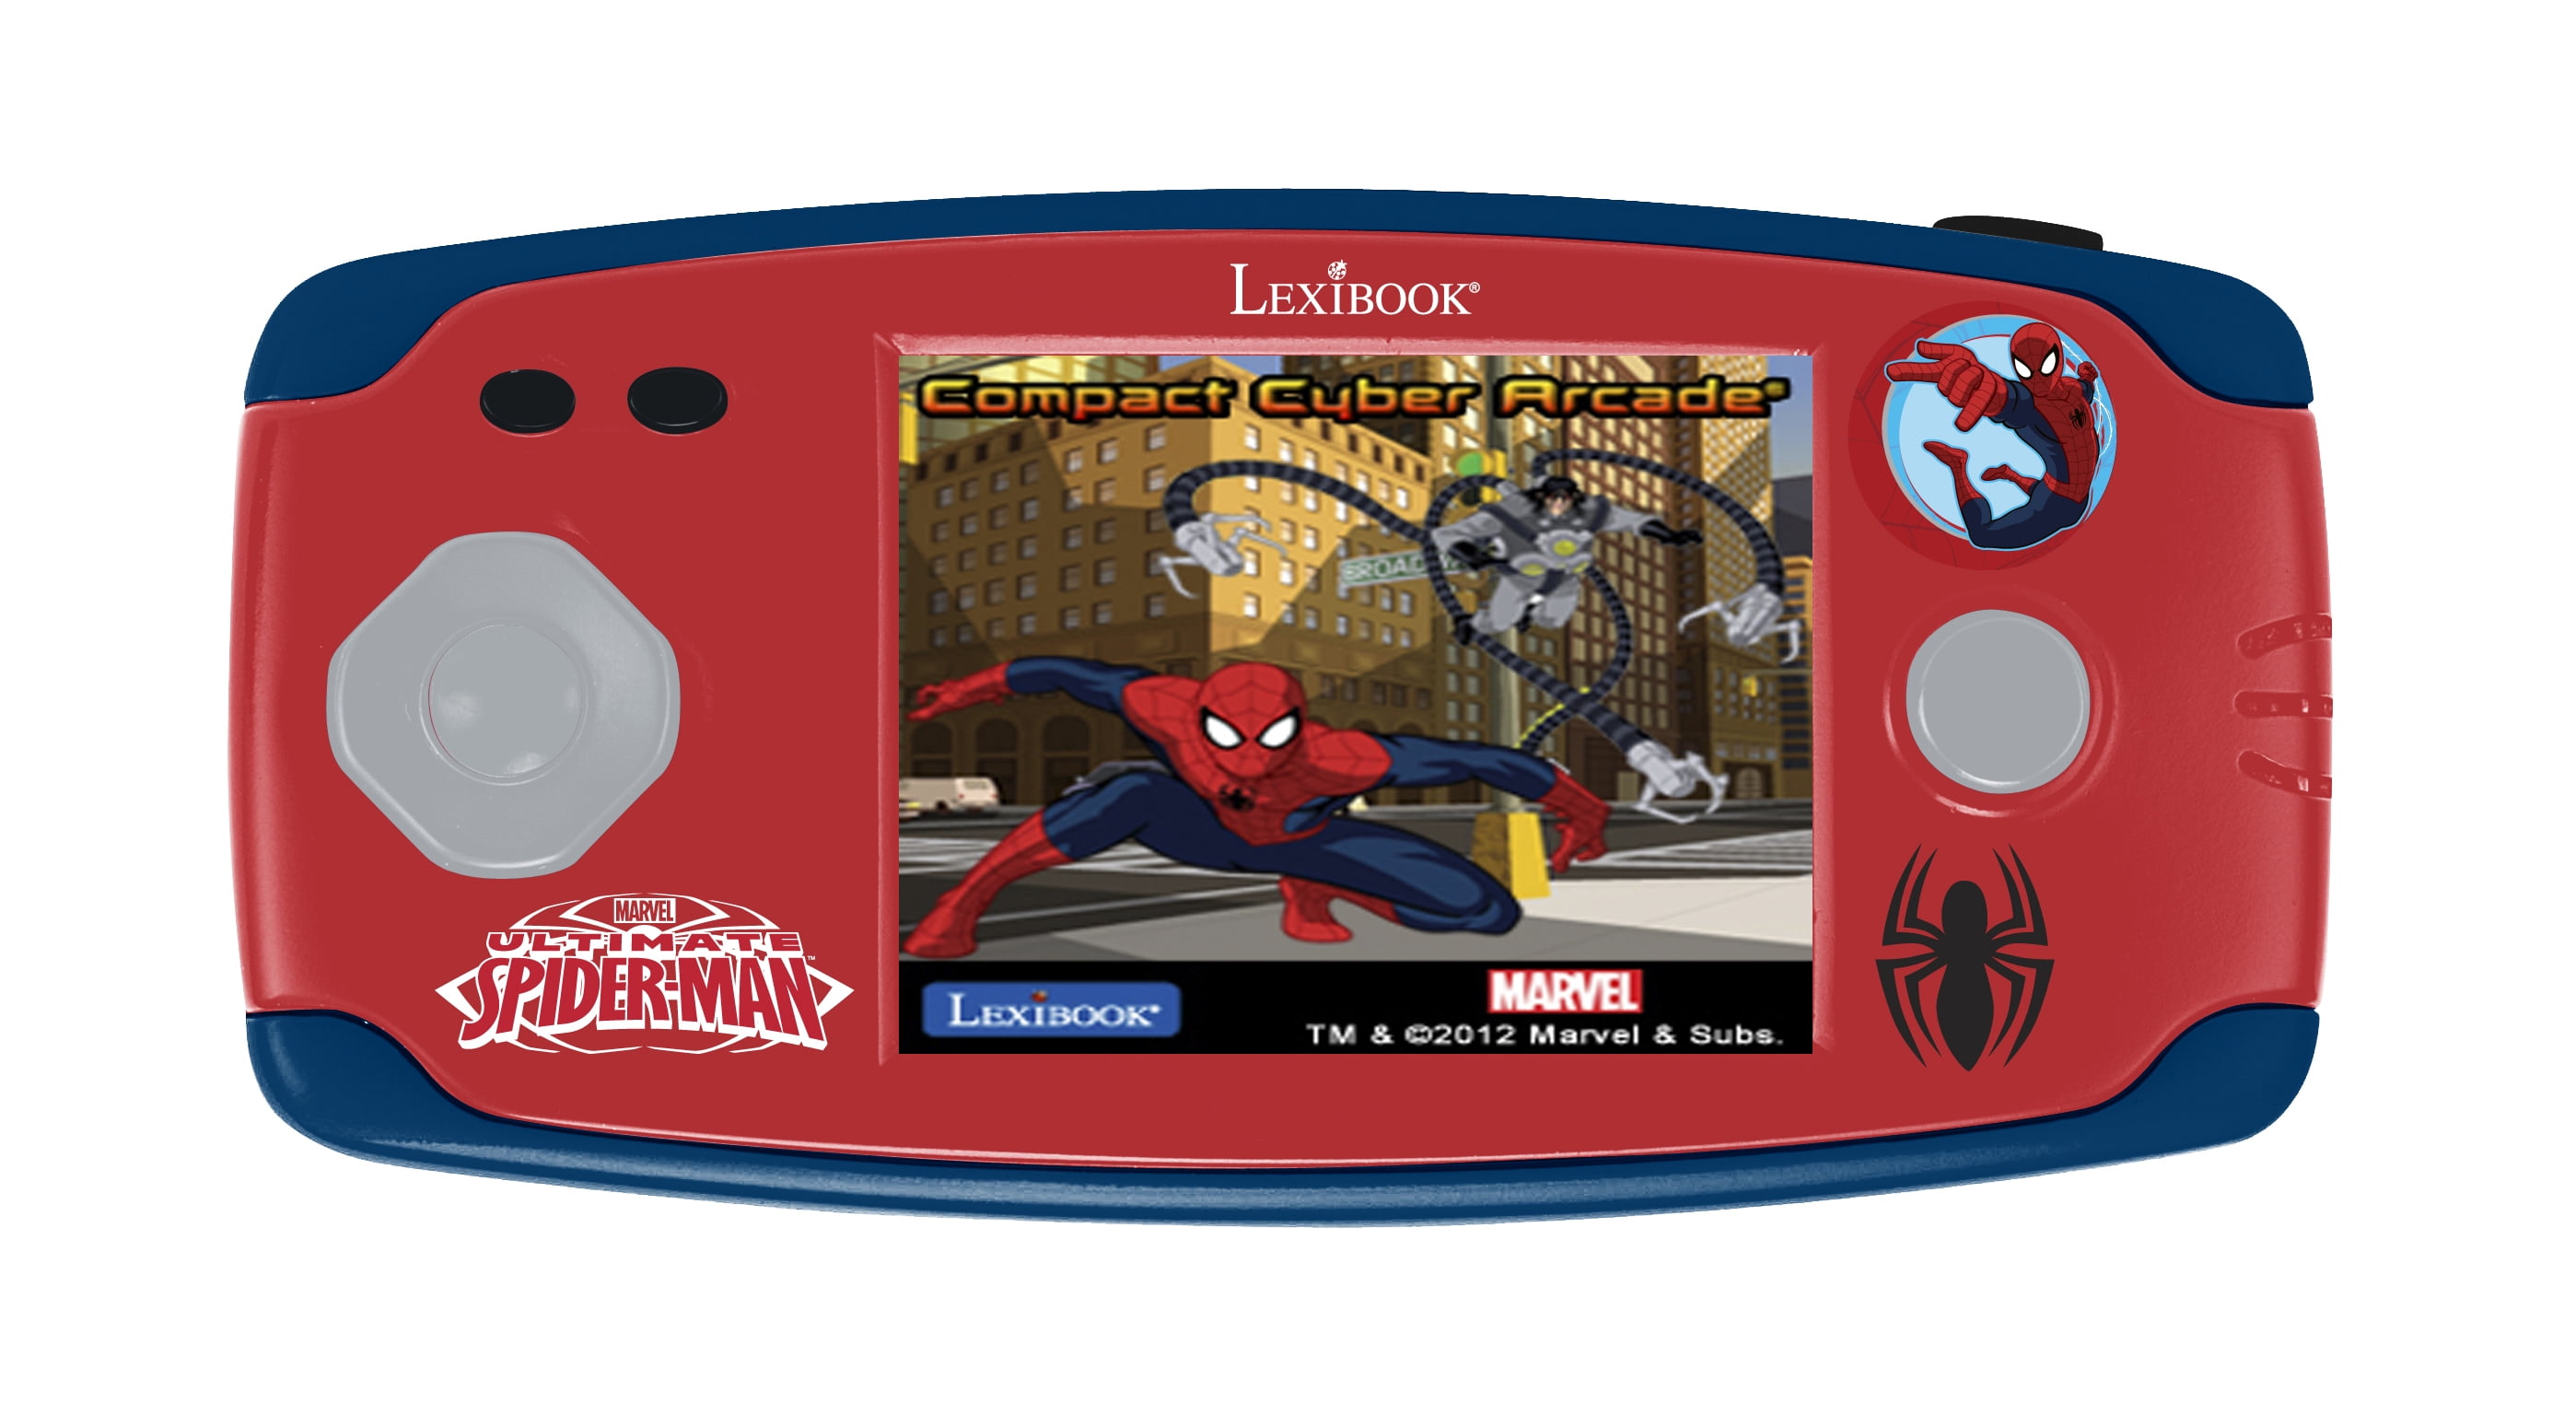 Lexibook Compact Cyber Arcade Spider-Man